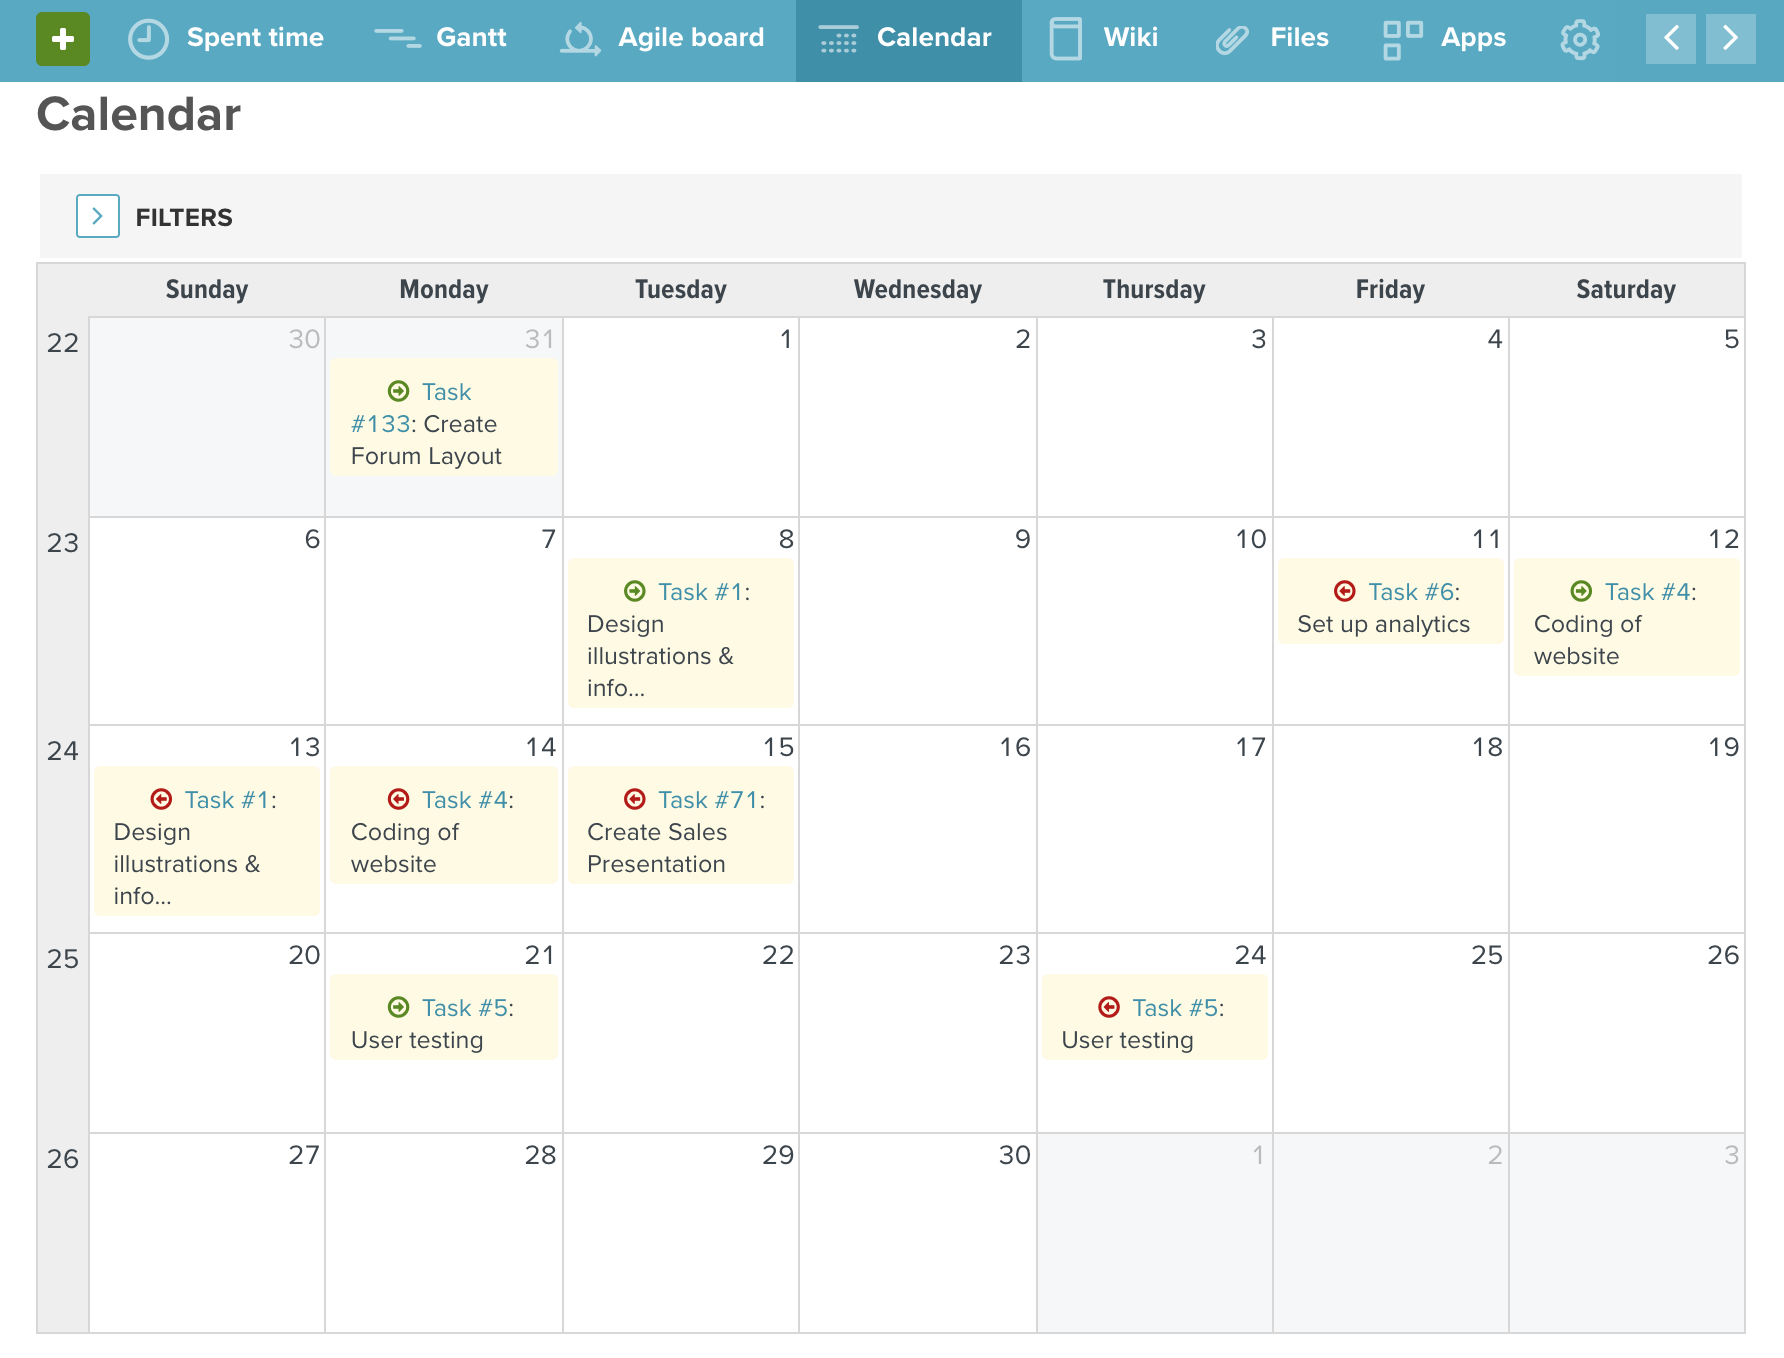 Calendar view with tasks